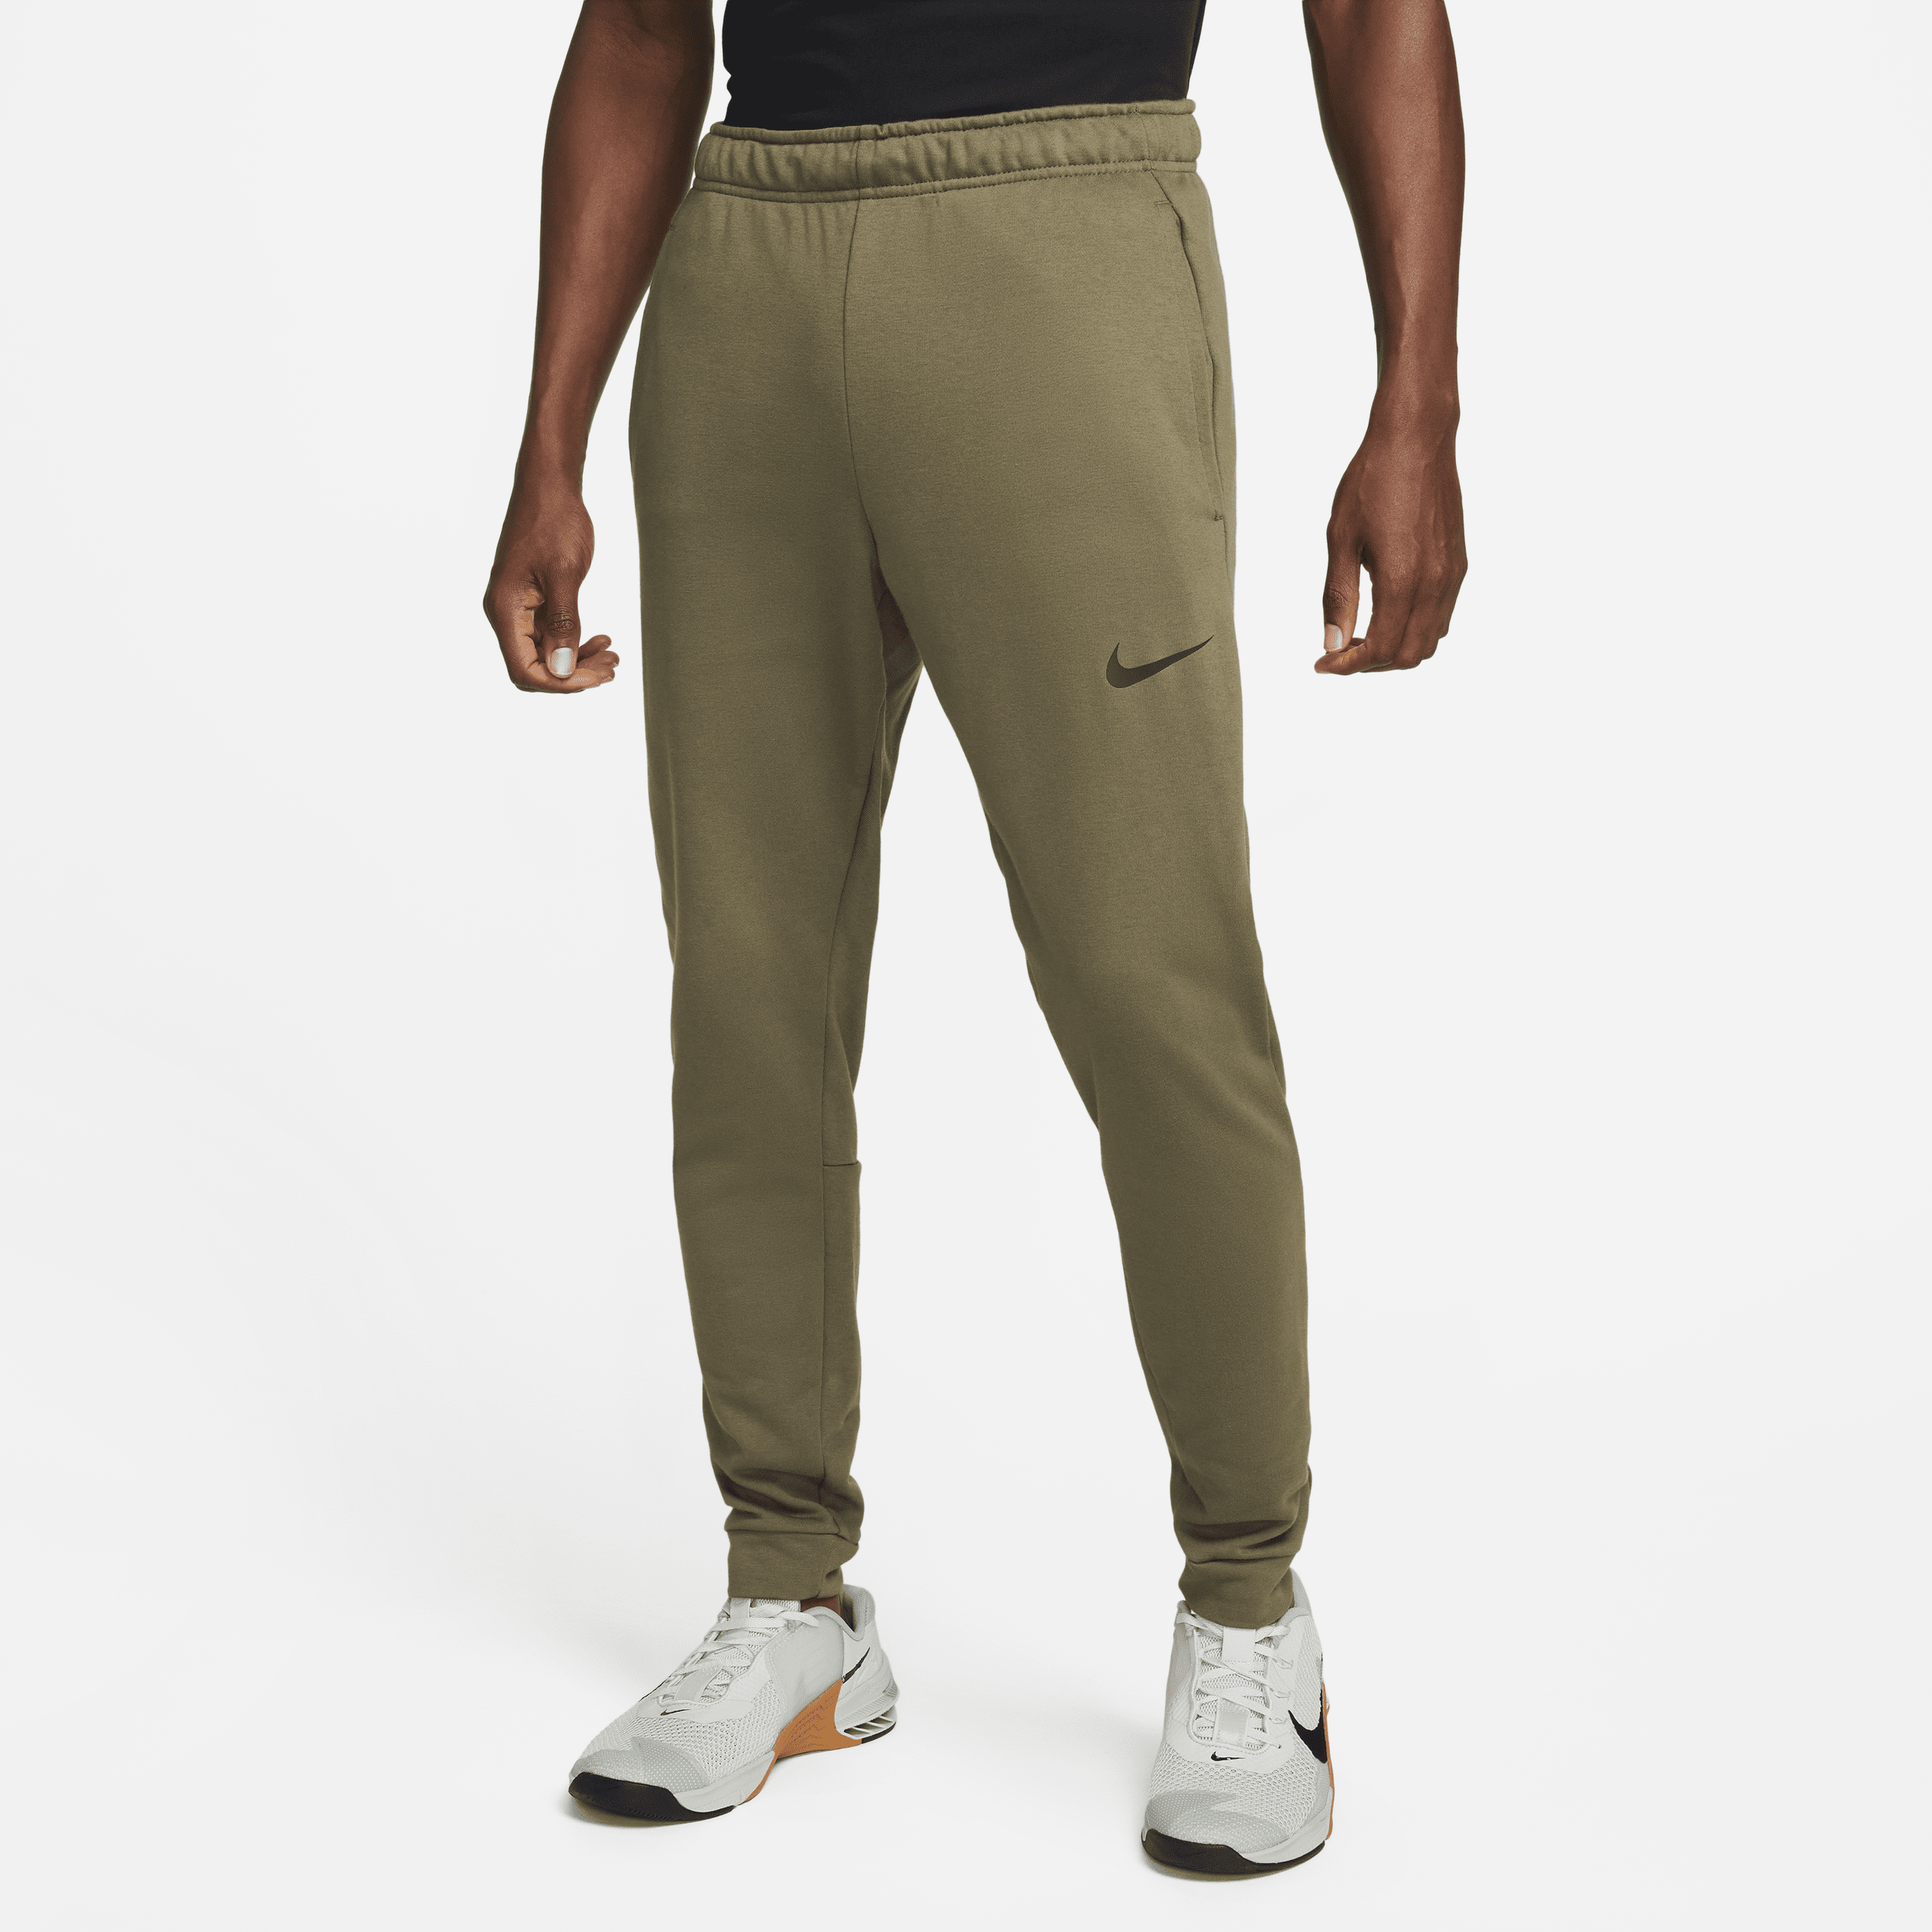 Nike Dry Dri-FIT-fitnessbukser i fleece til mænd - grøn